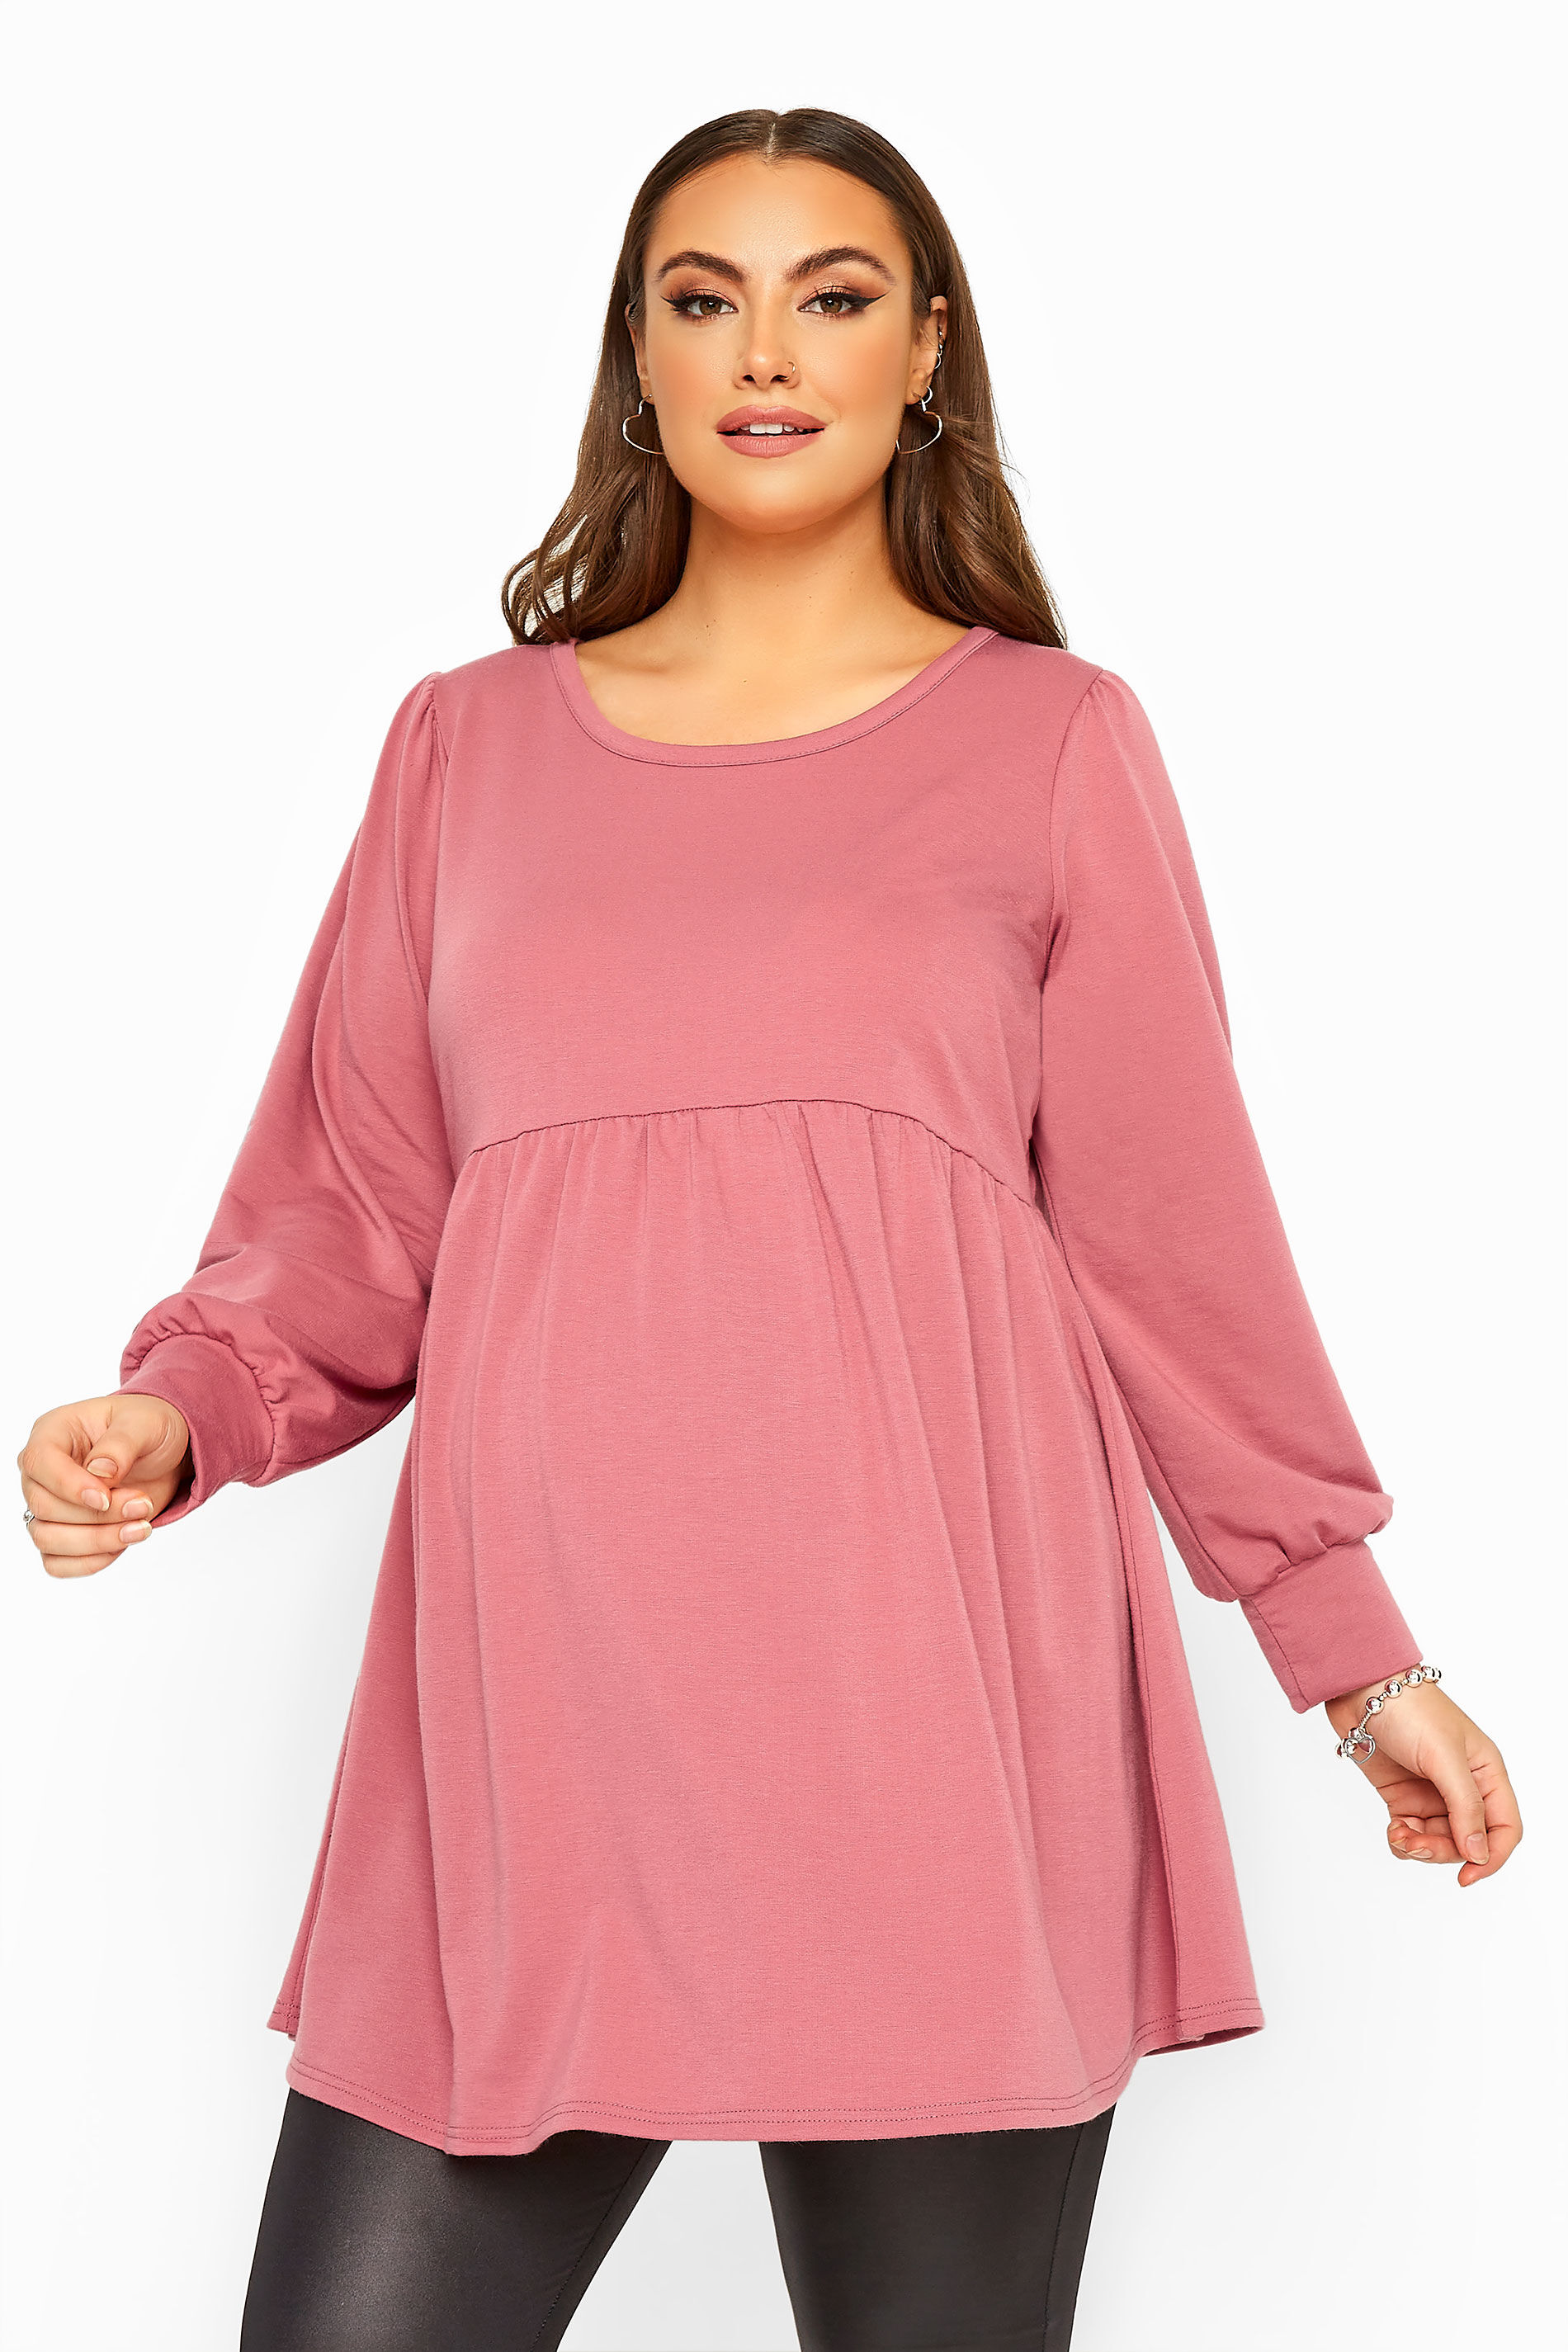 Yours Clothing Bump it up maternity pink peplum sweatshirt